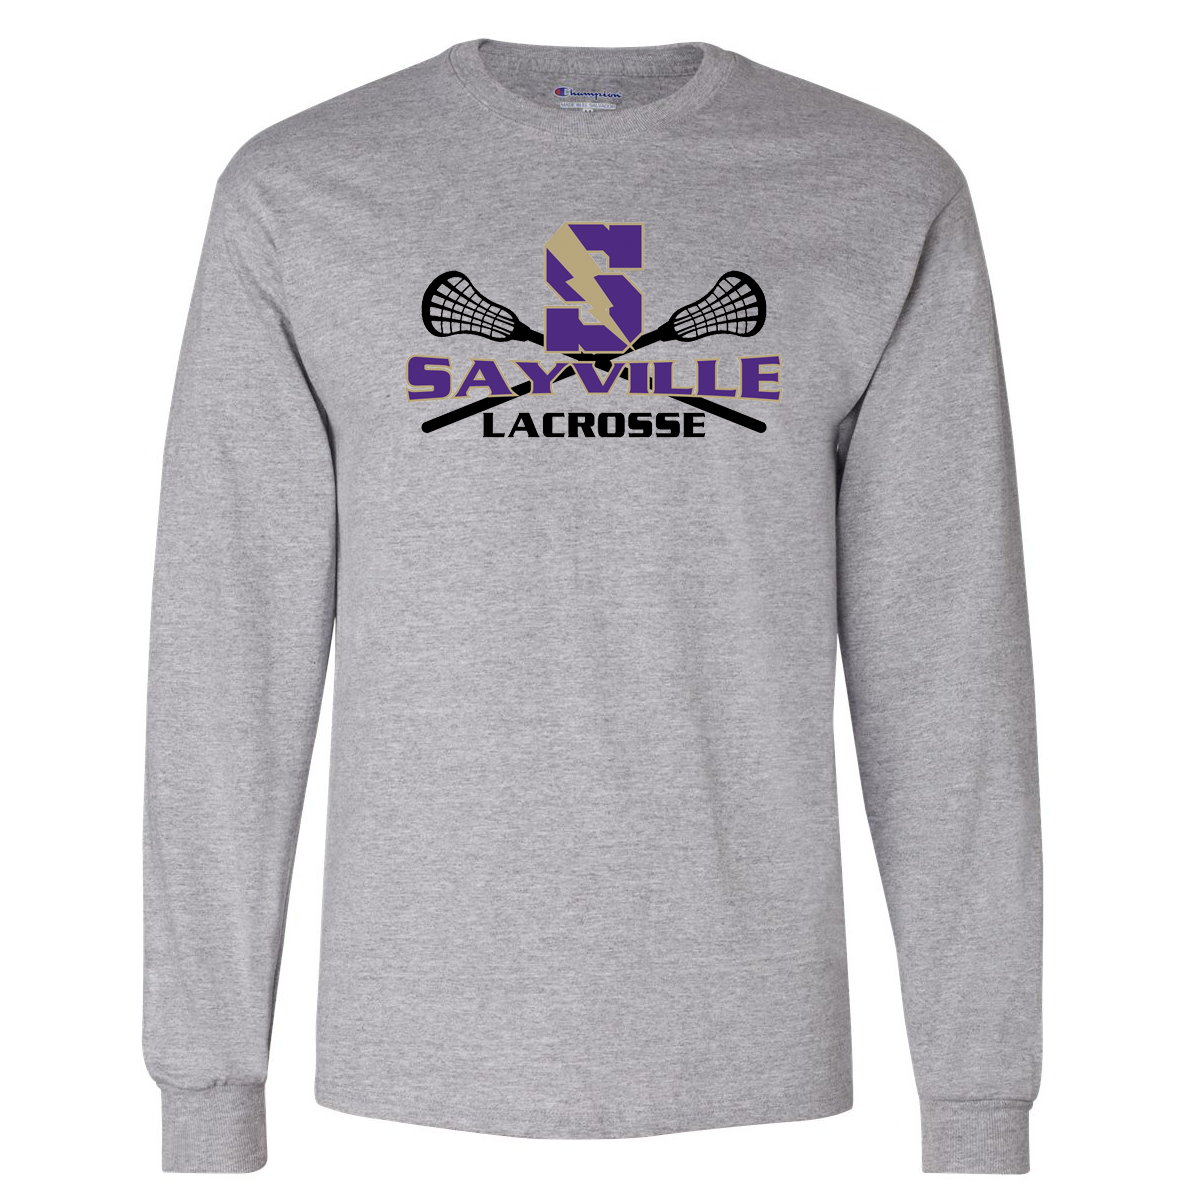 Sayville Lacrosse Champion Long Sleeve T-Shirt